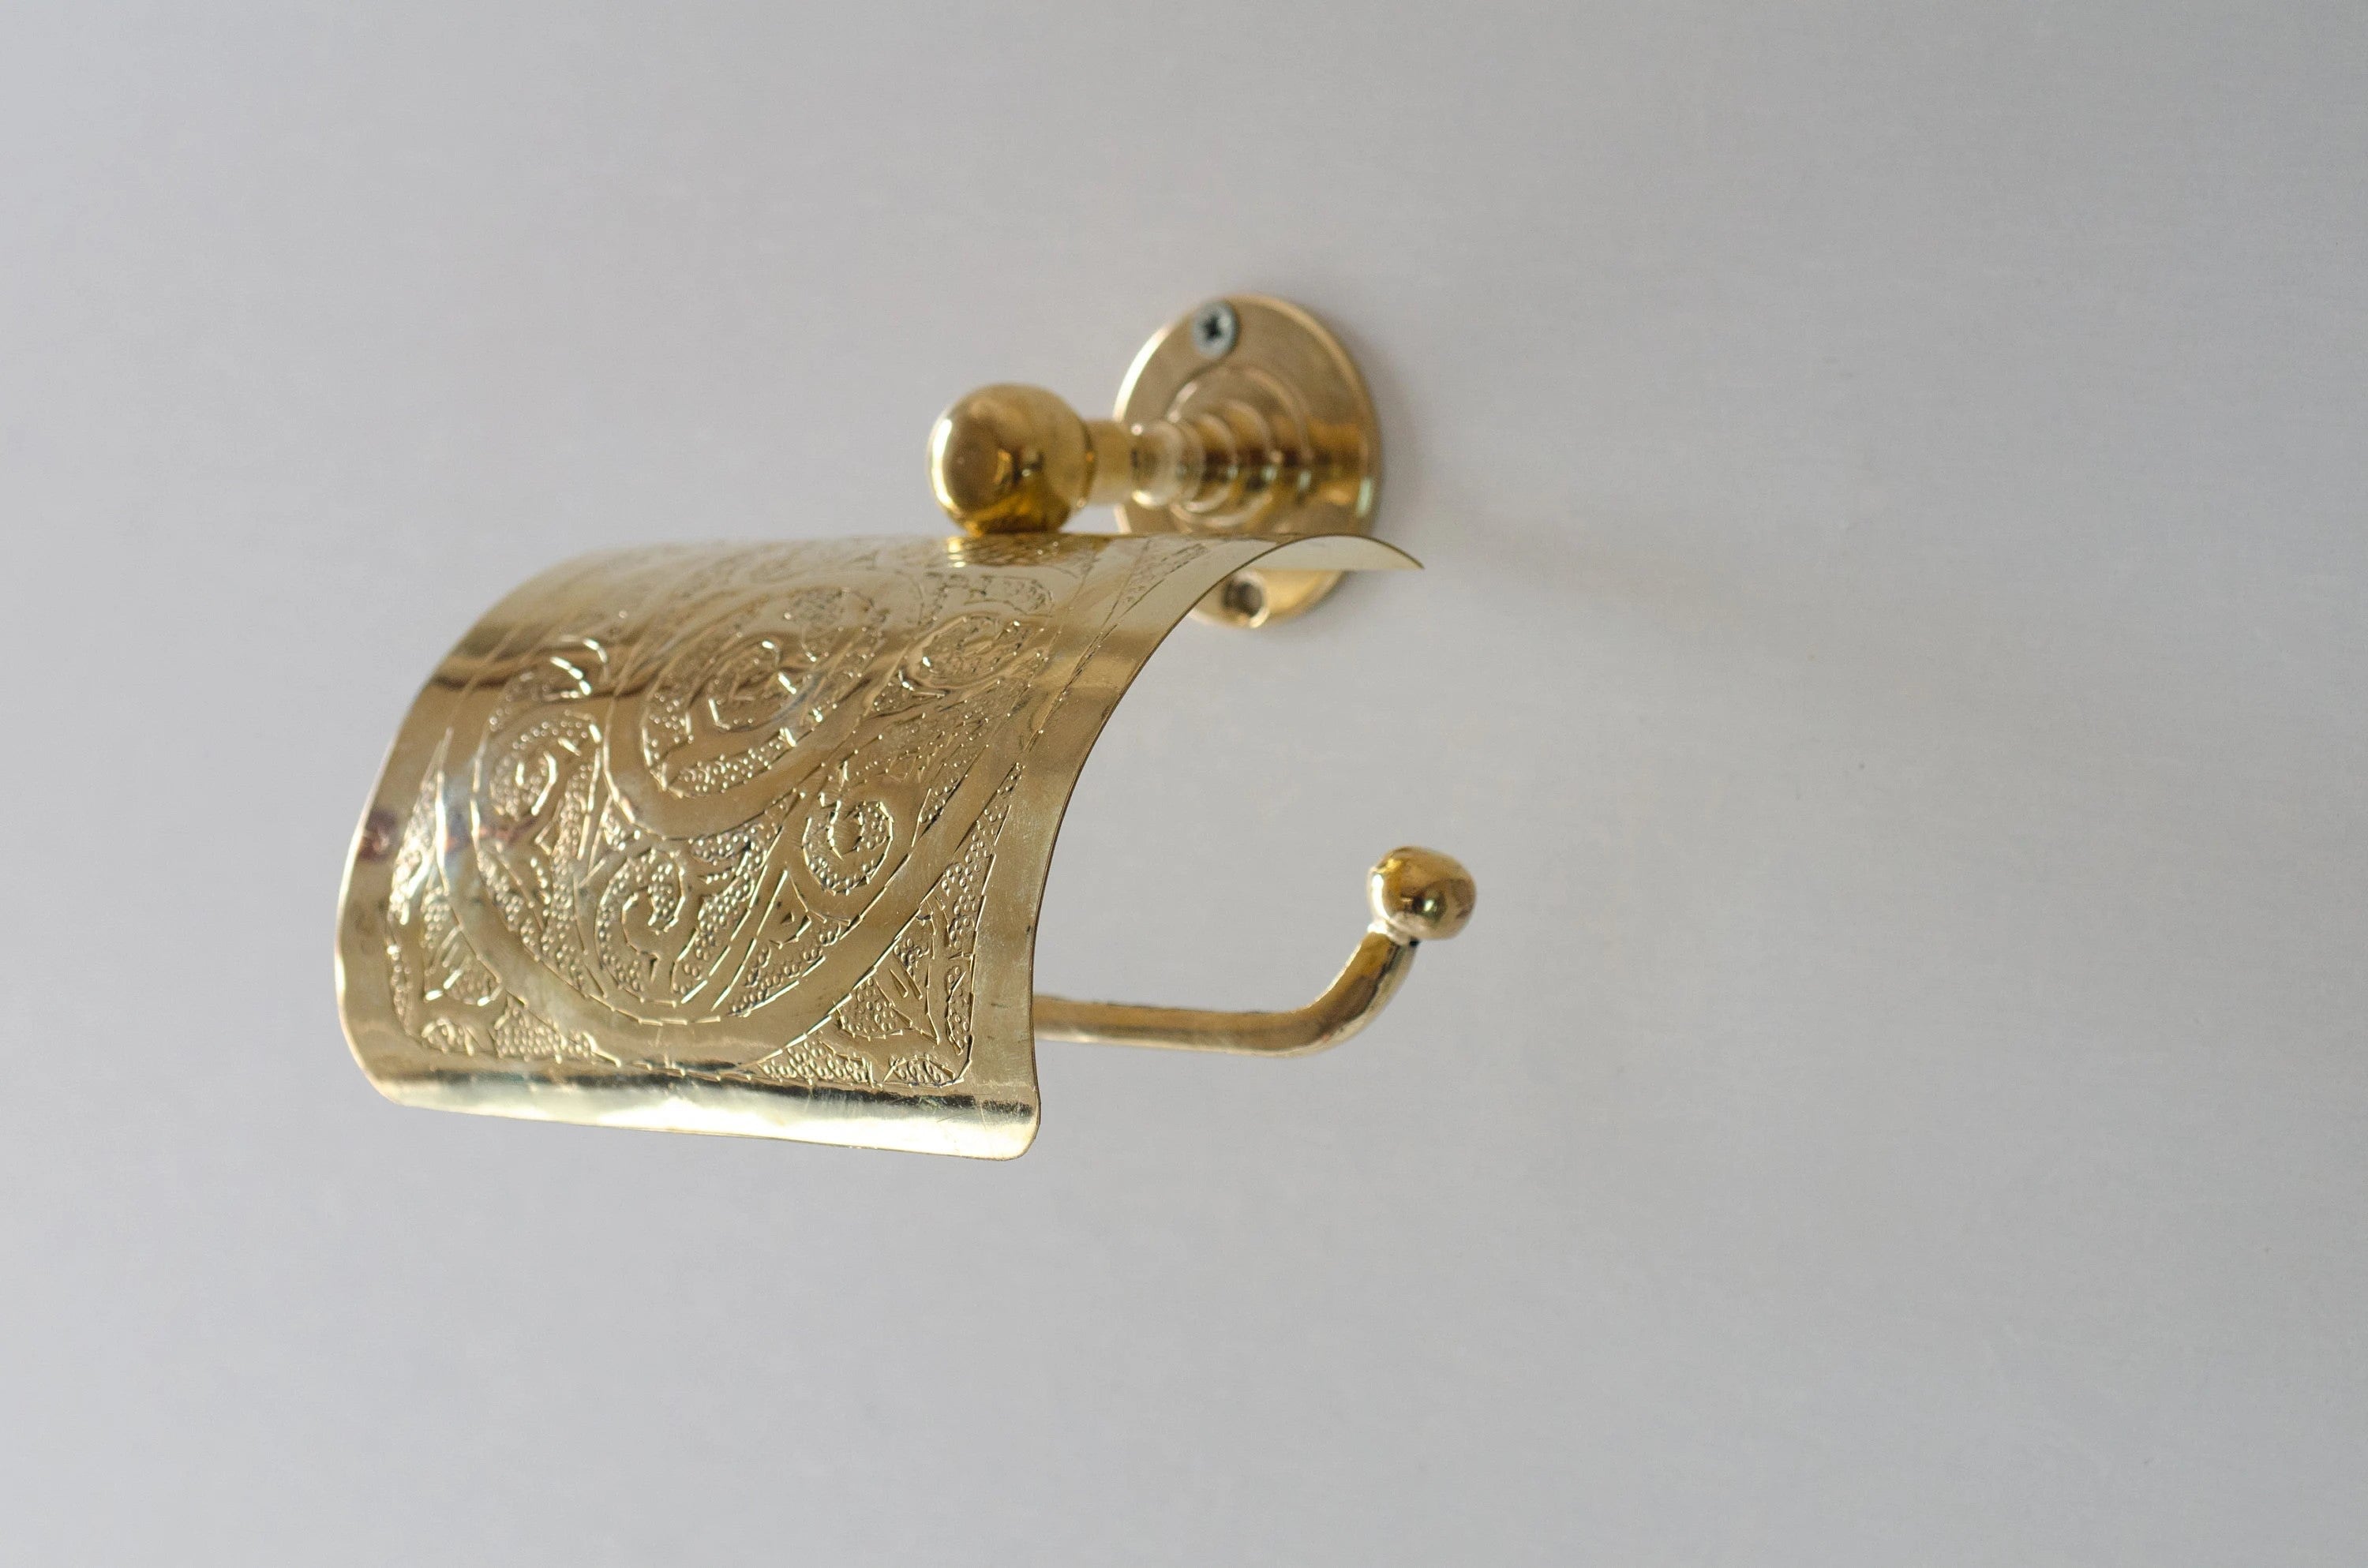 Solid Brass Toilet Paper Holder, Handcrafted Powder Room Roll Holder